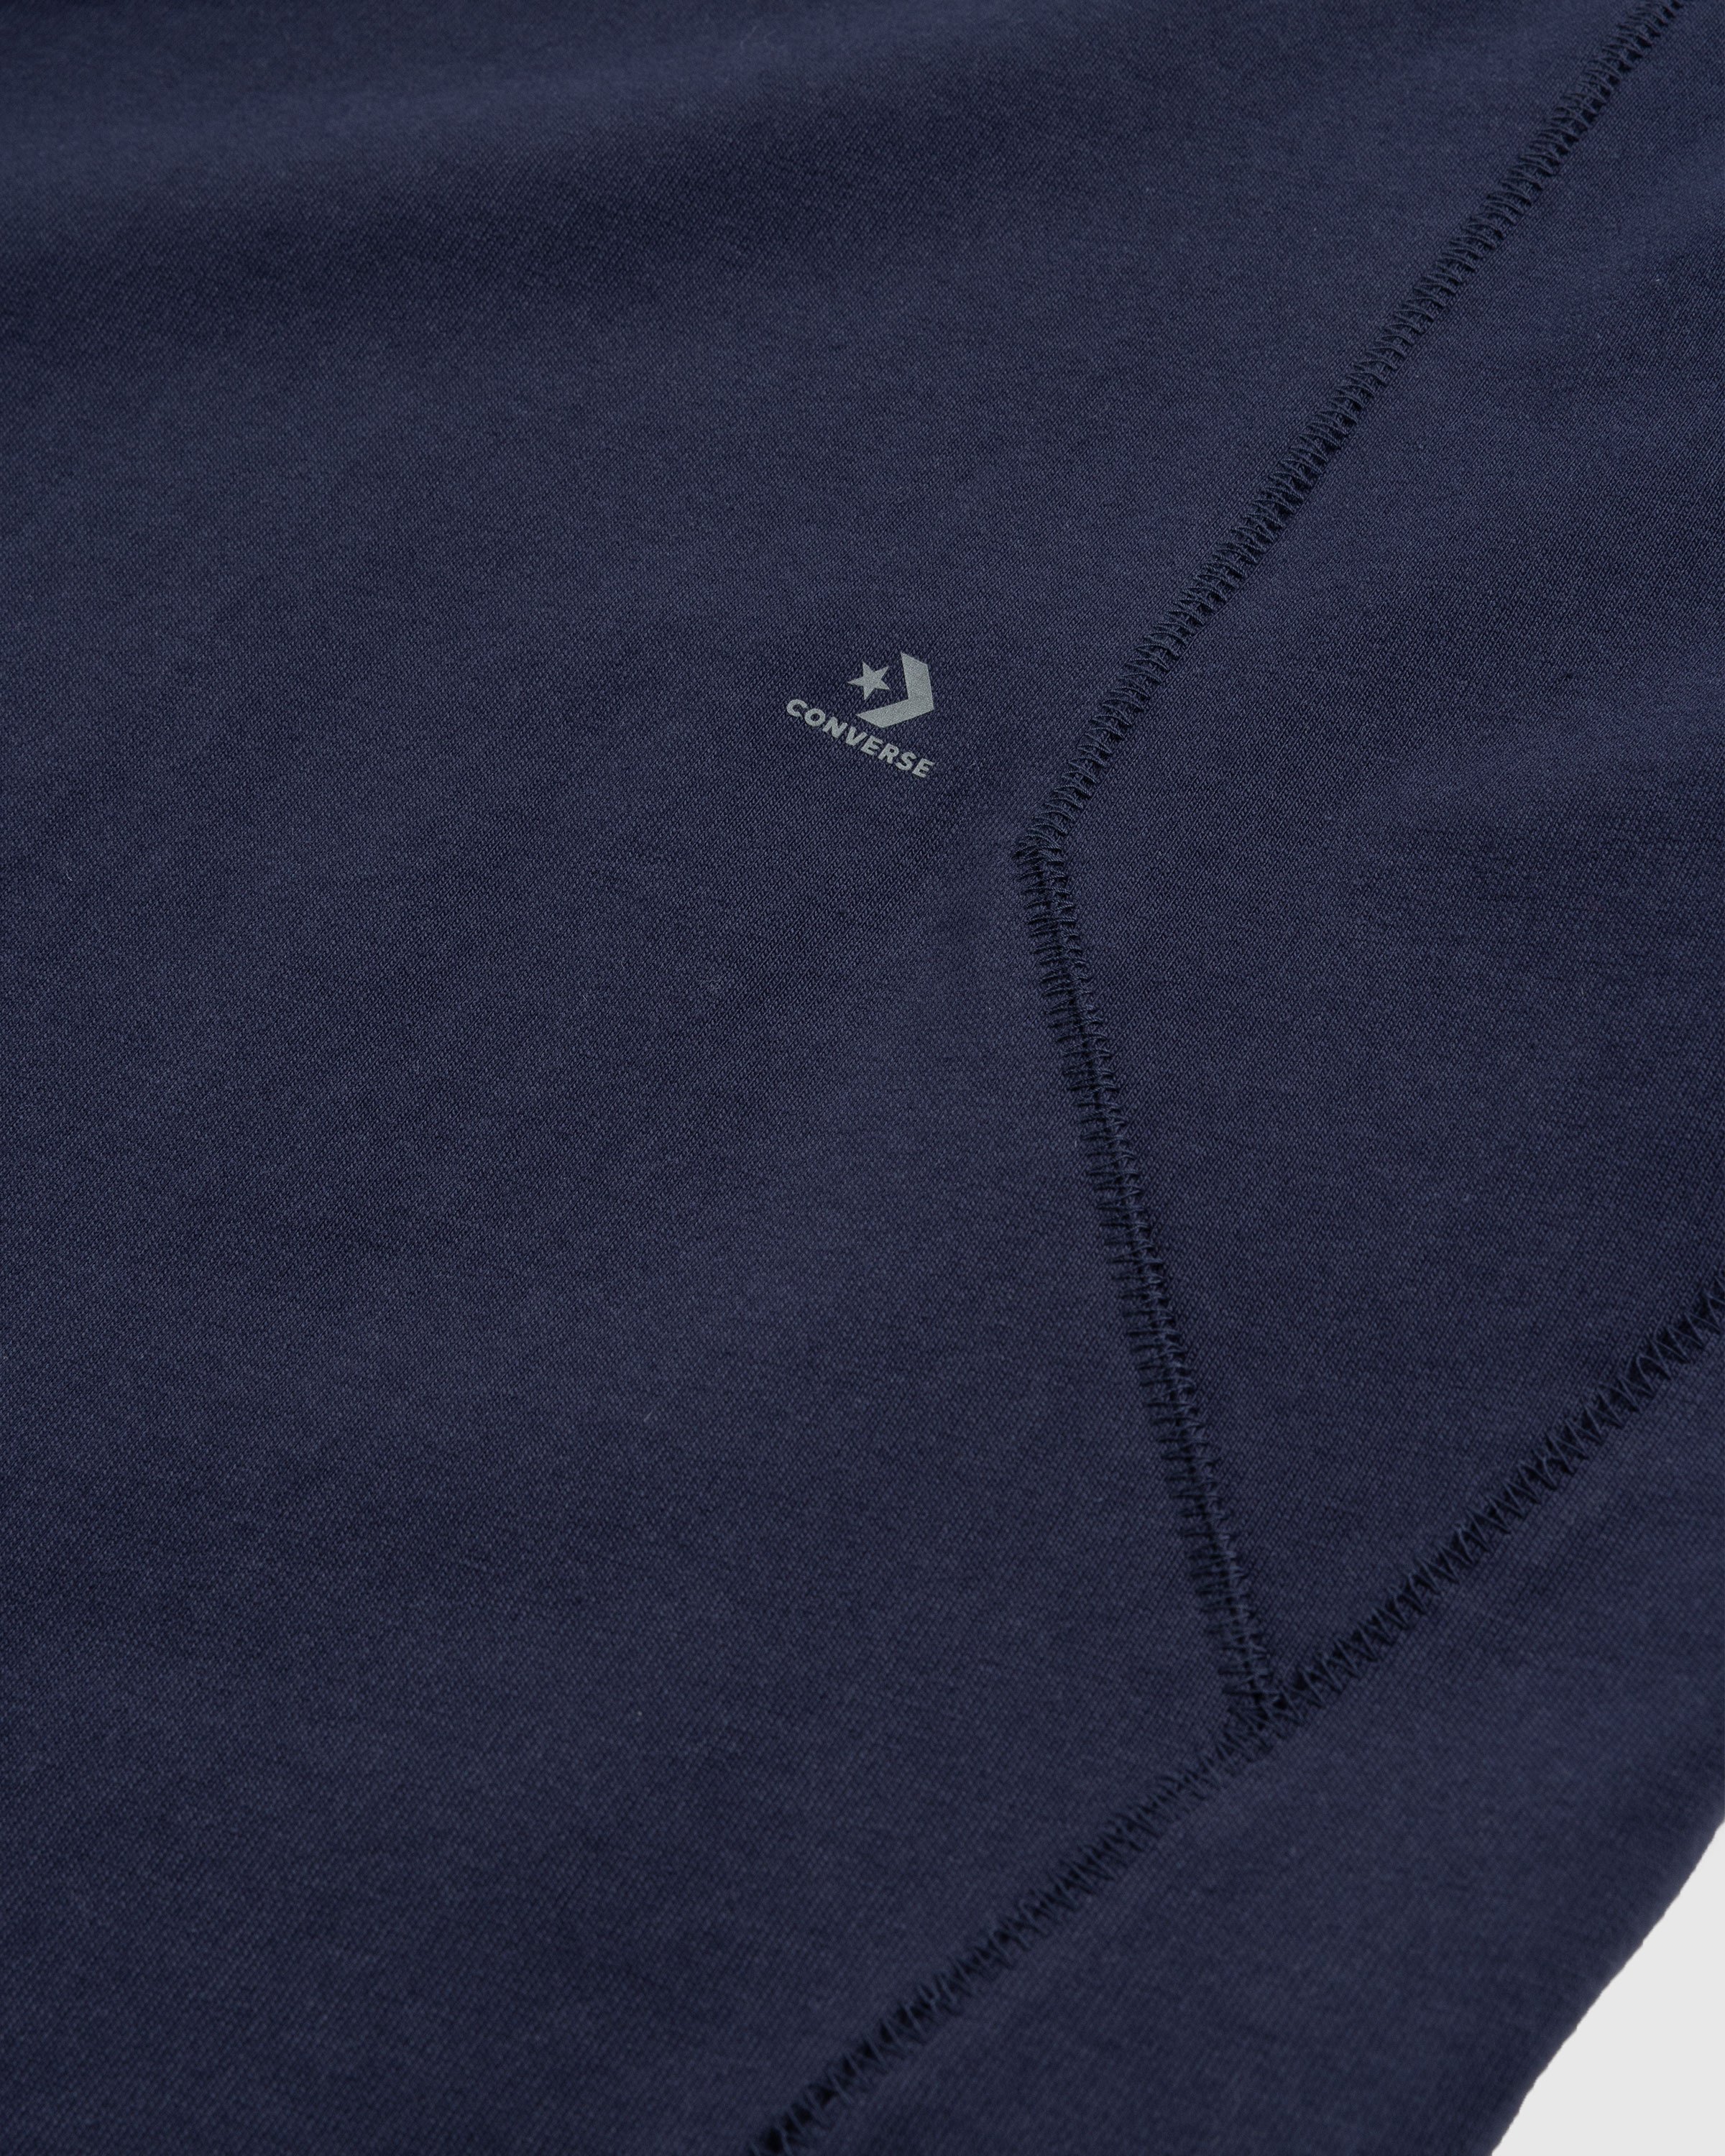 Converse x A-Cold-Wall* - Reflective T-Shirt Navy - Clothing - Blue - Image 6